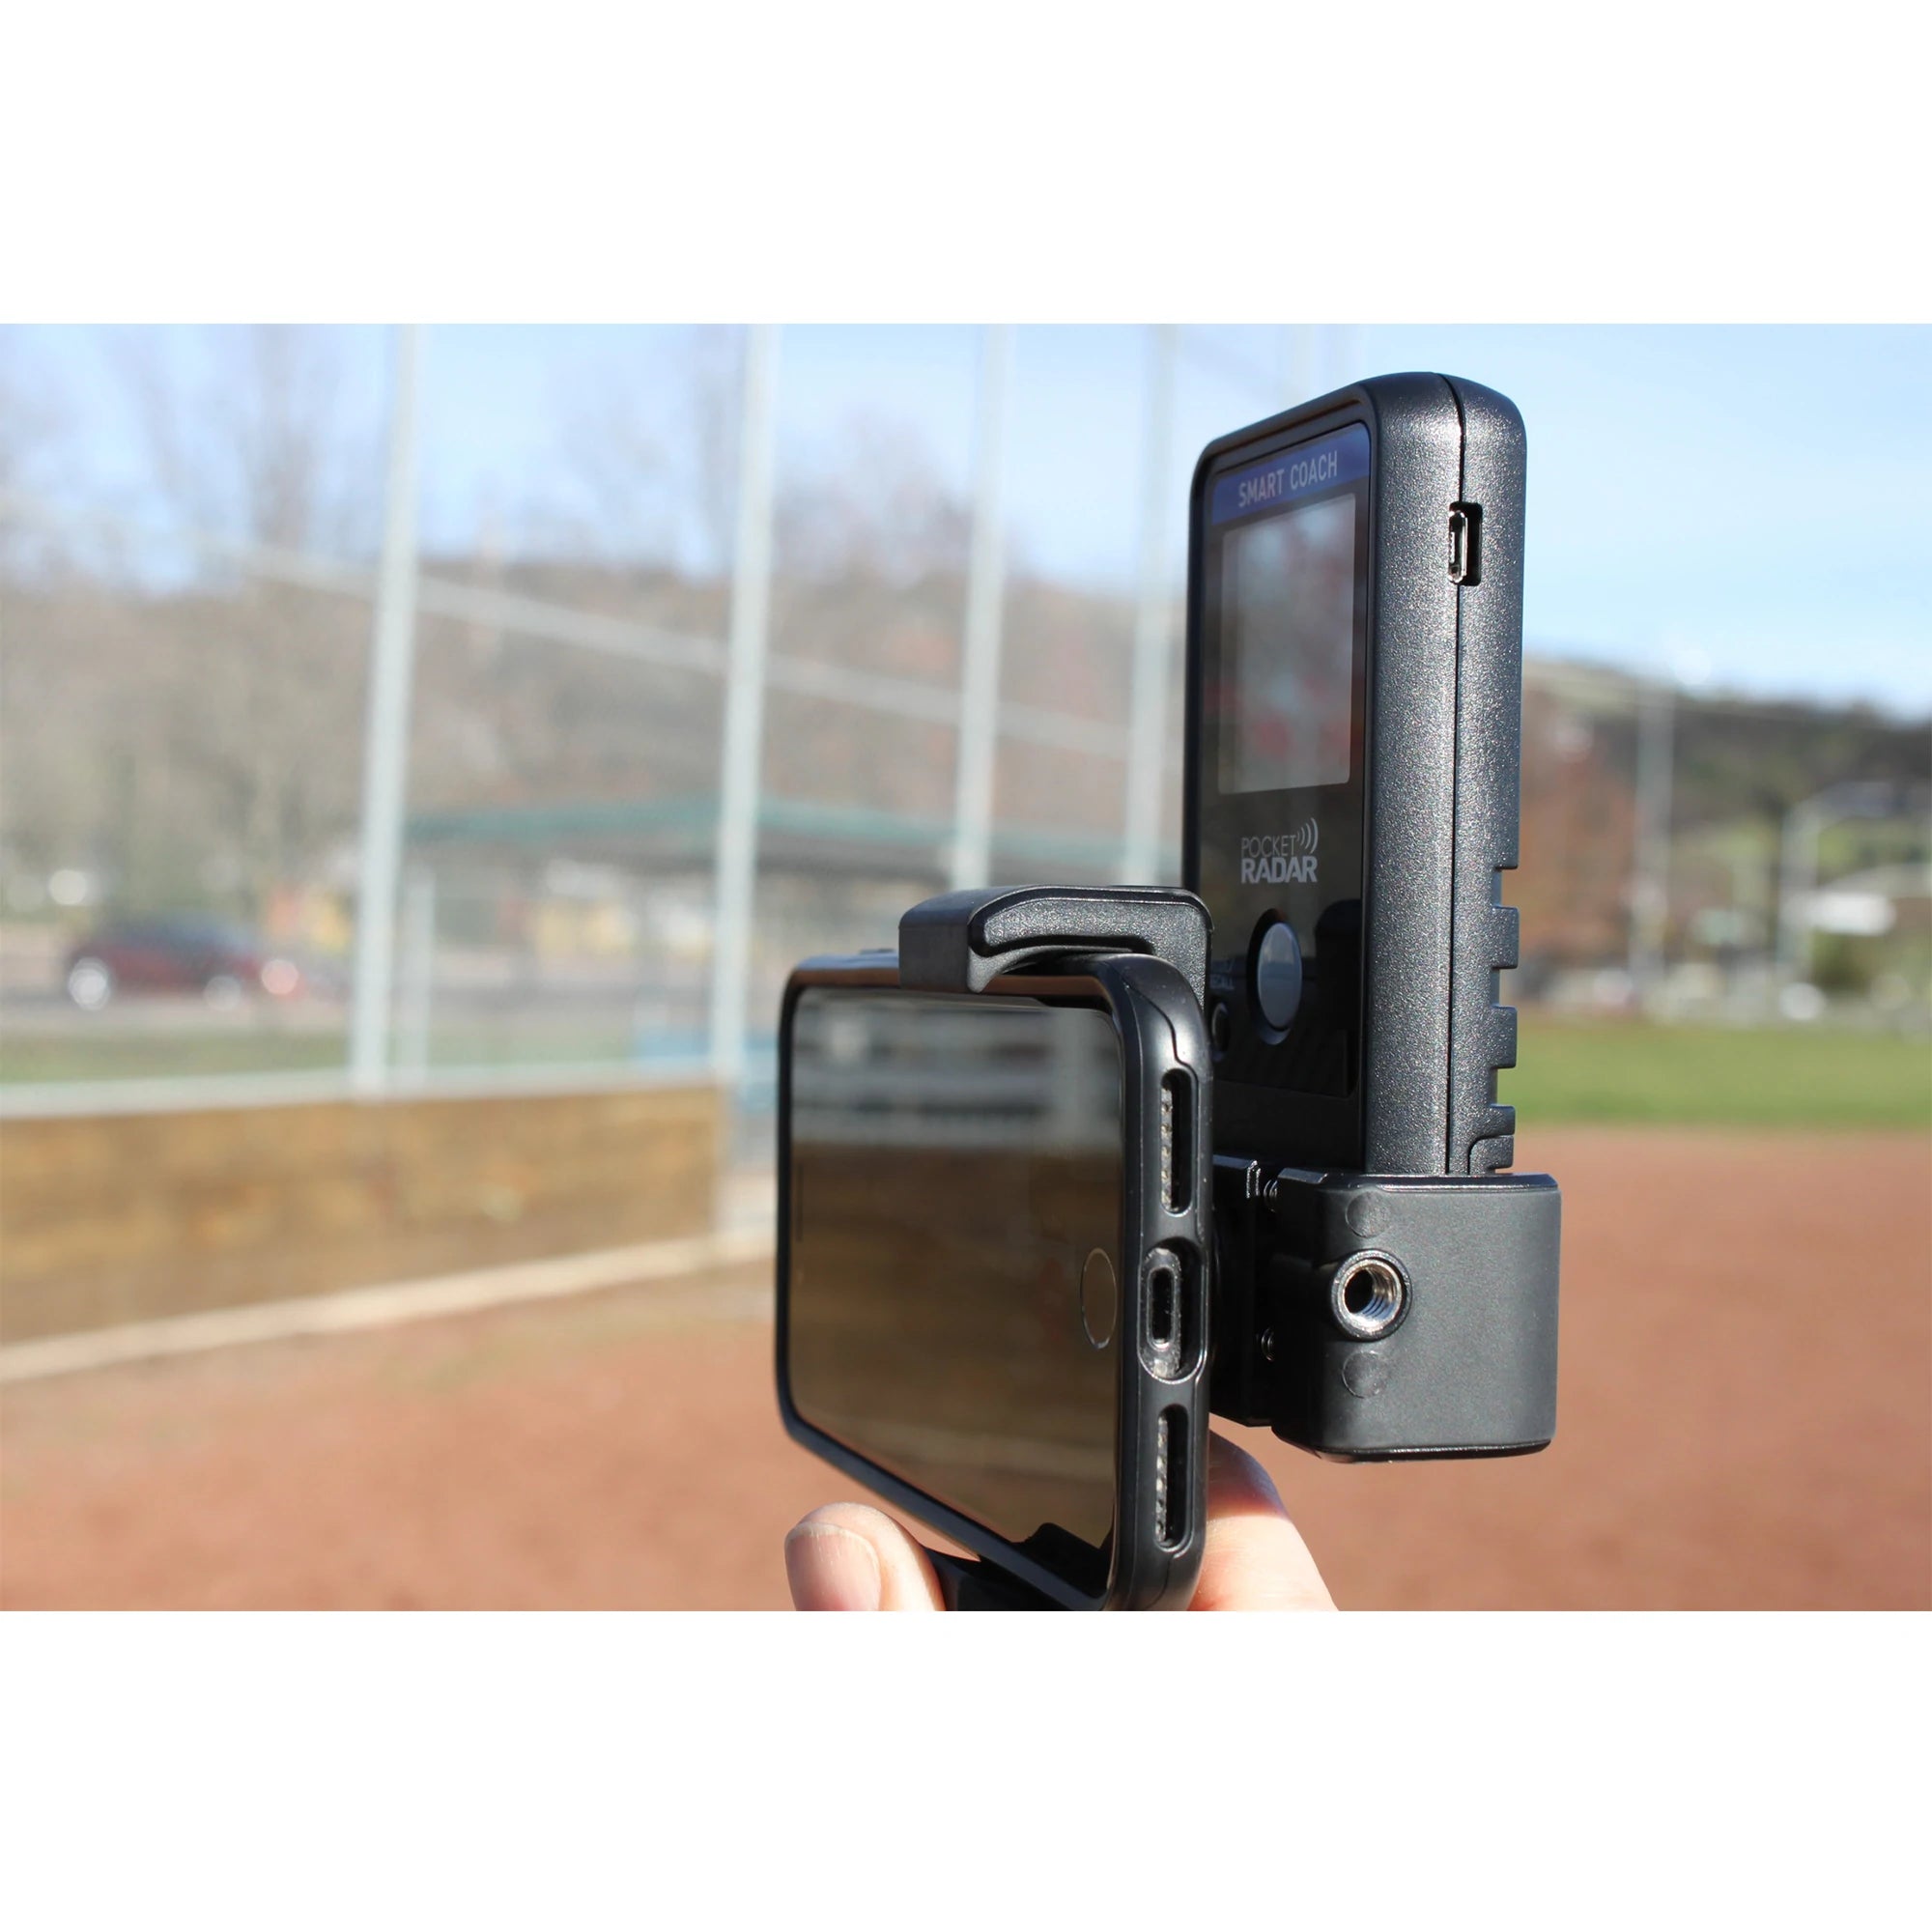 Smart Coach Radar App System Bundle Attached to a Phone 